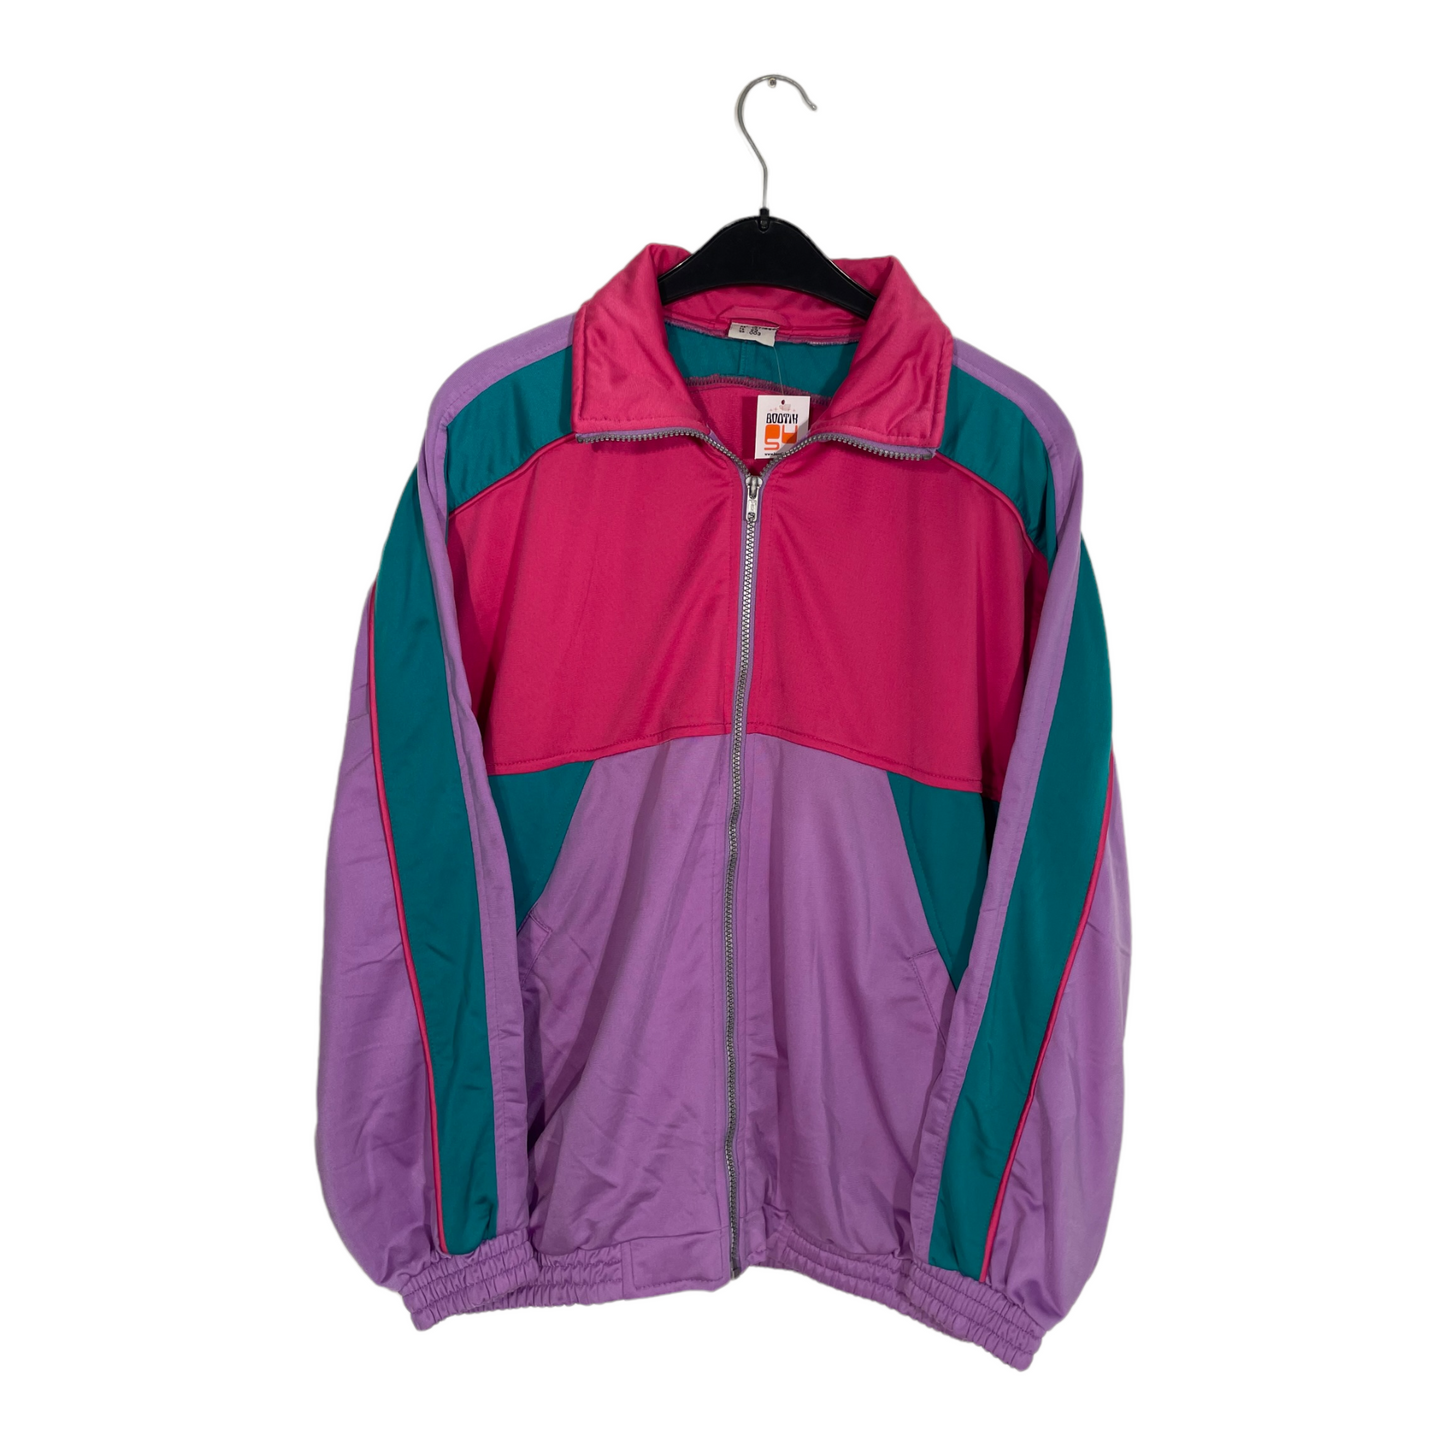 Pink Retro Sweatjacket